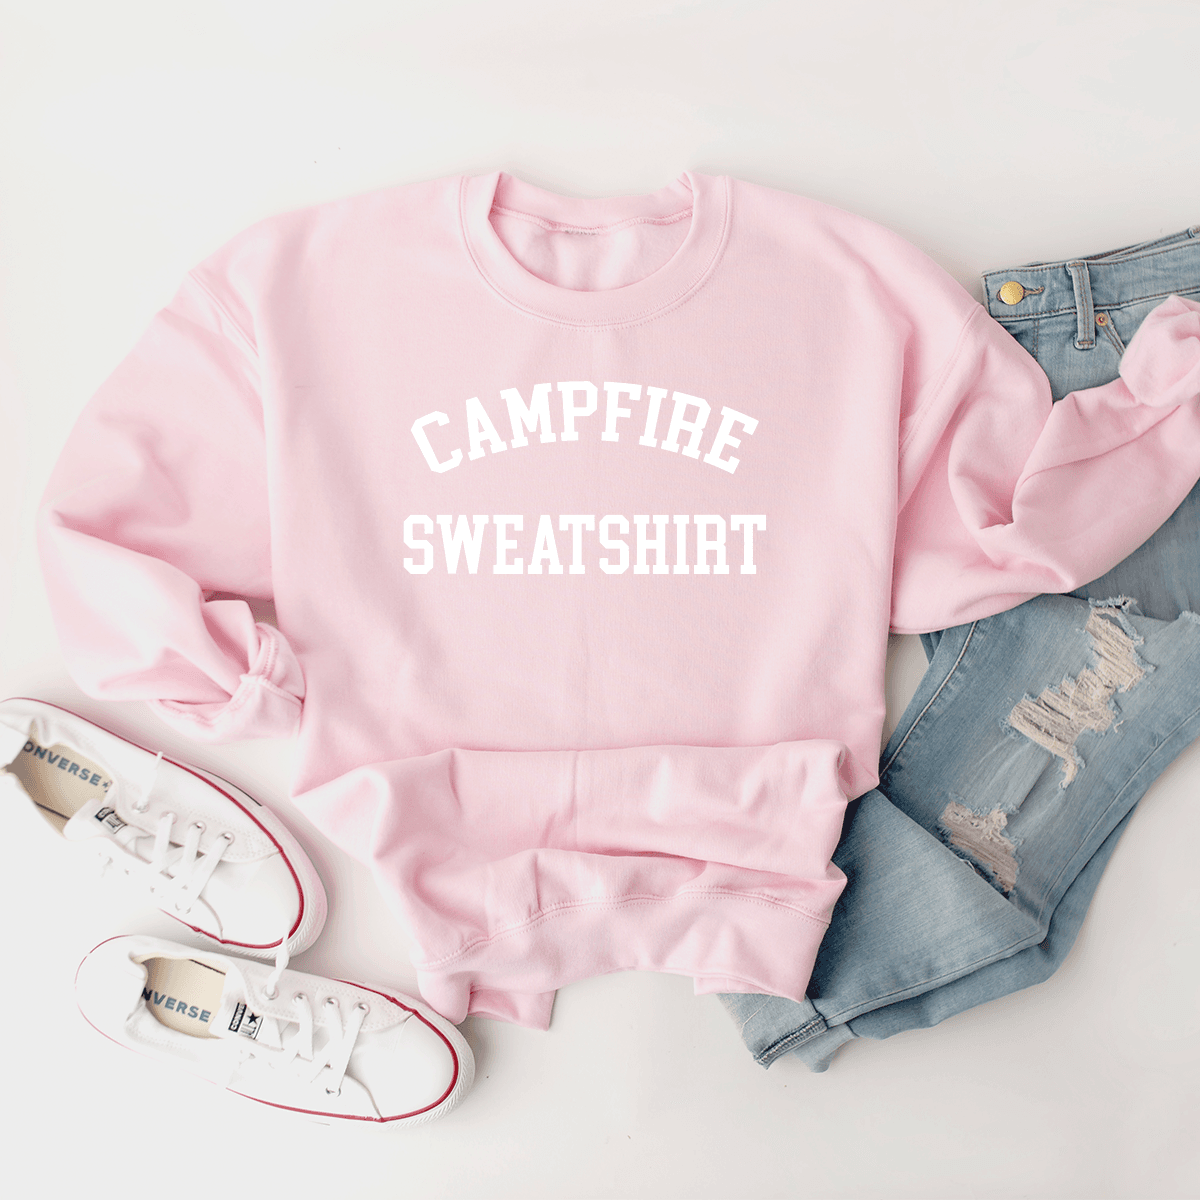 Campfire Sweatshirt - Sweatshirt